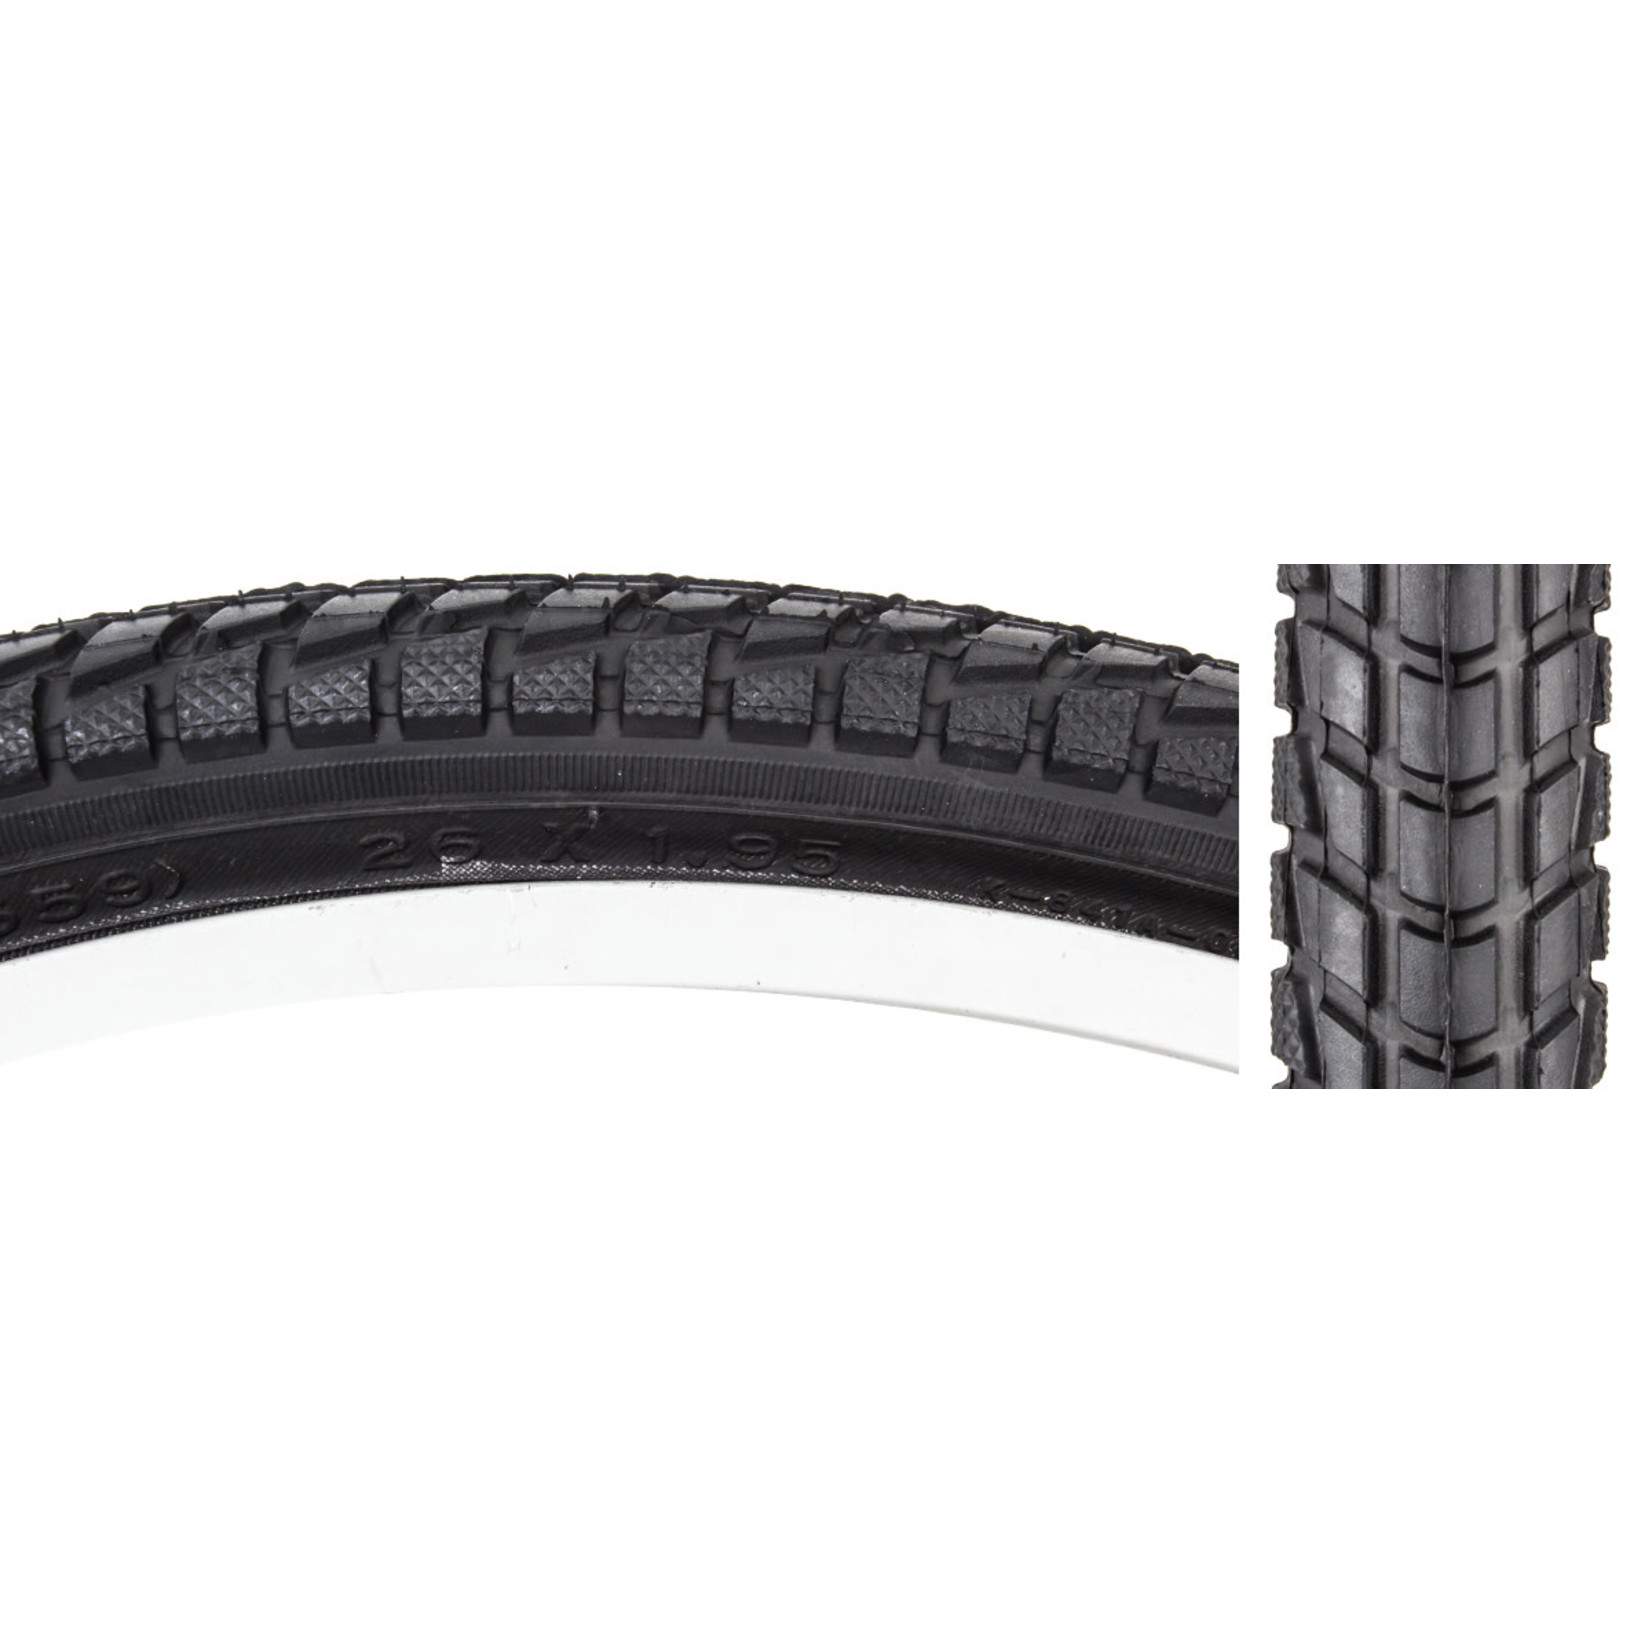 Sunlite 26x1.95 Komfort K841A Wire Bead Tire Black